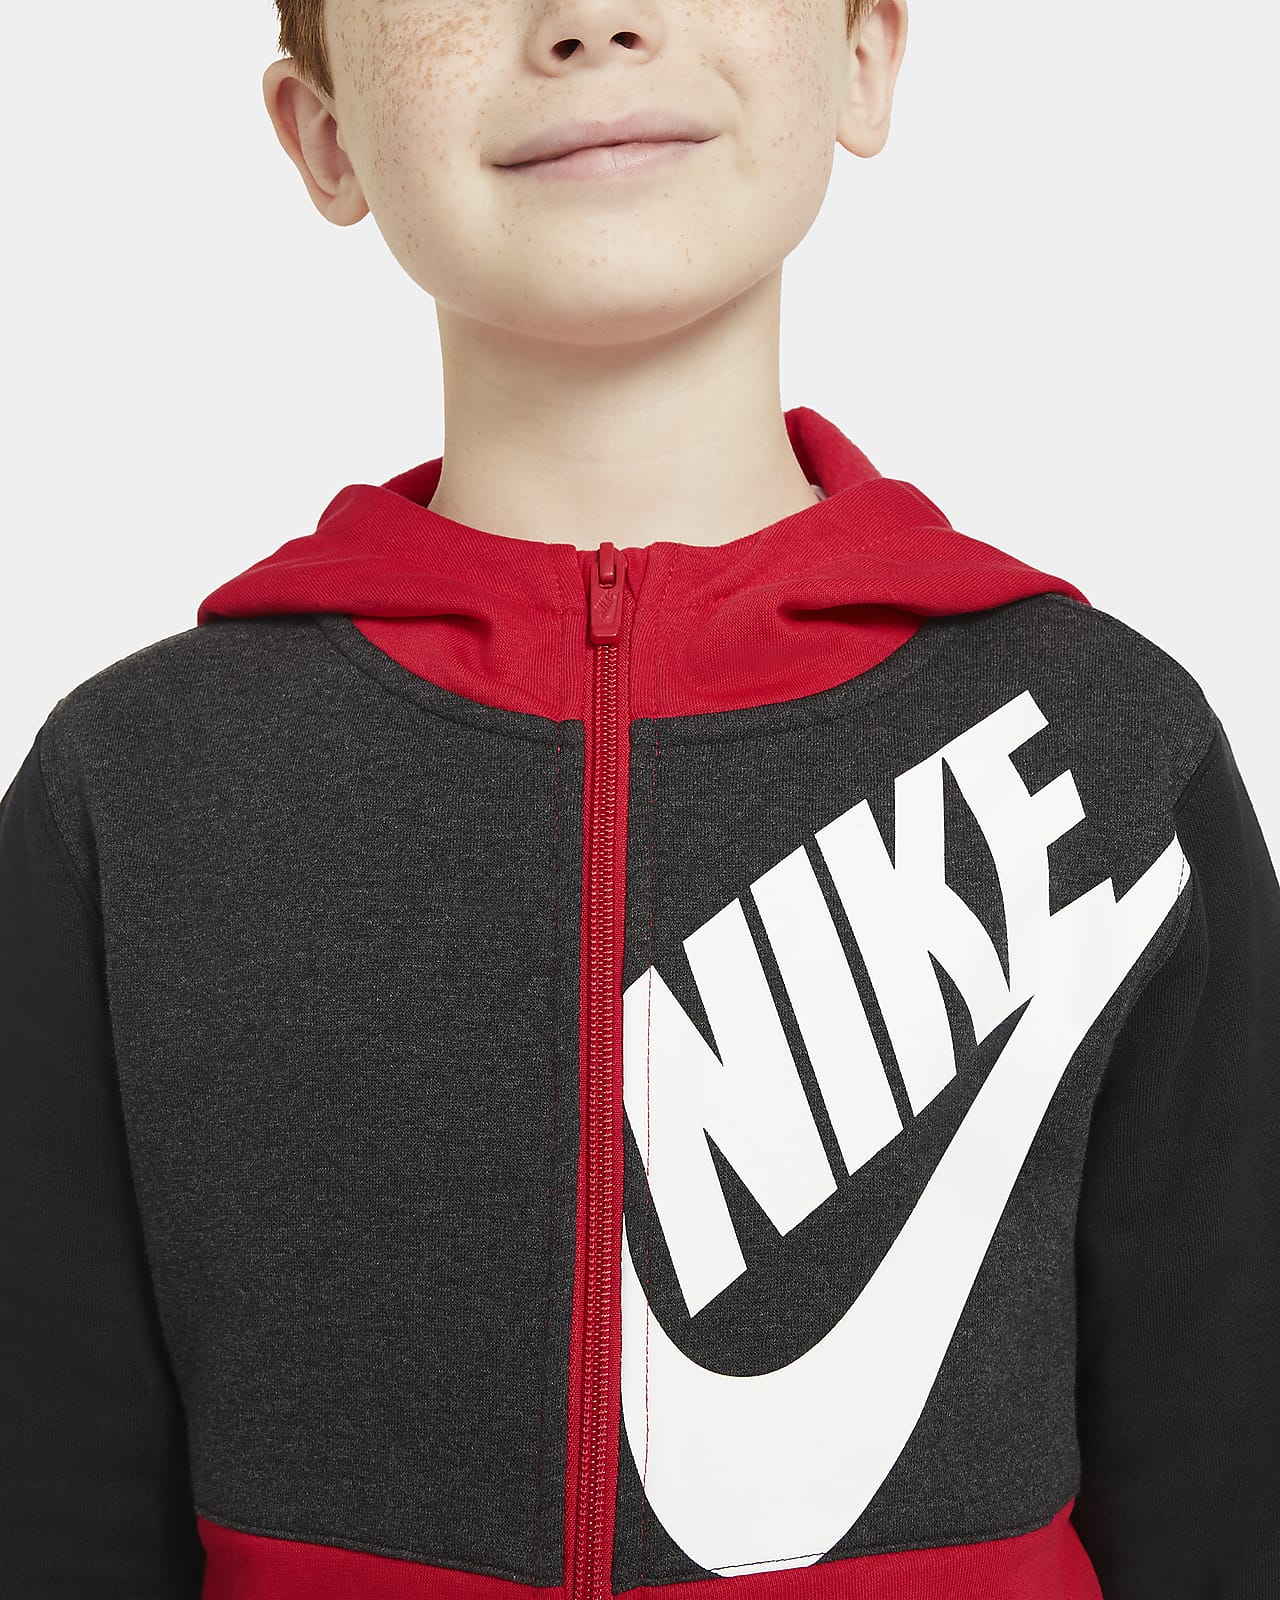 Nike Sportswear Big Kids' (Boys') Full 